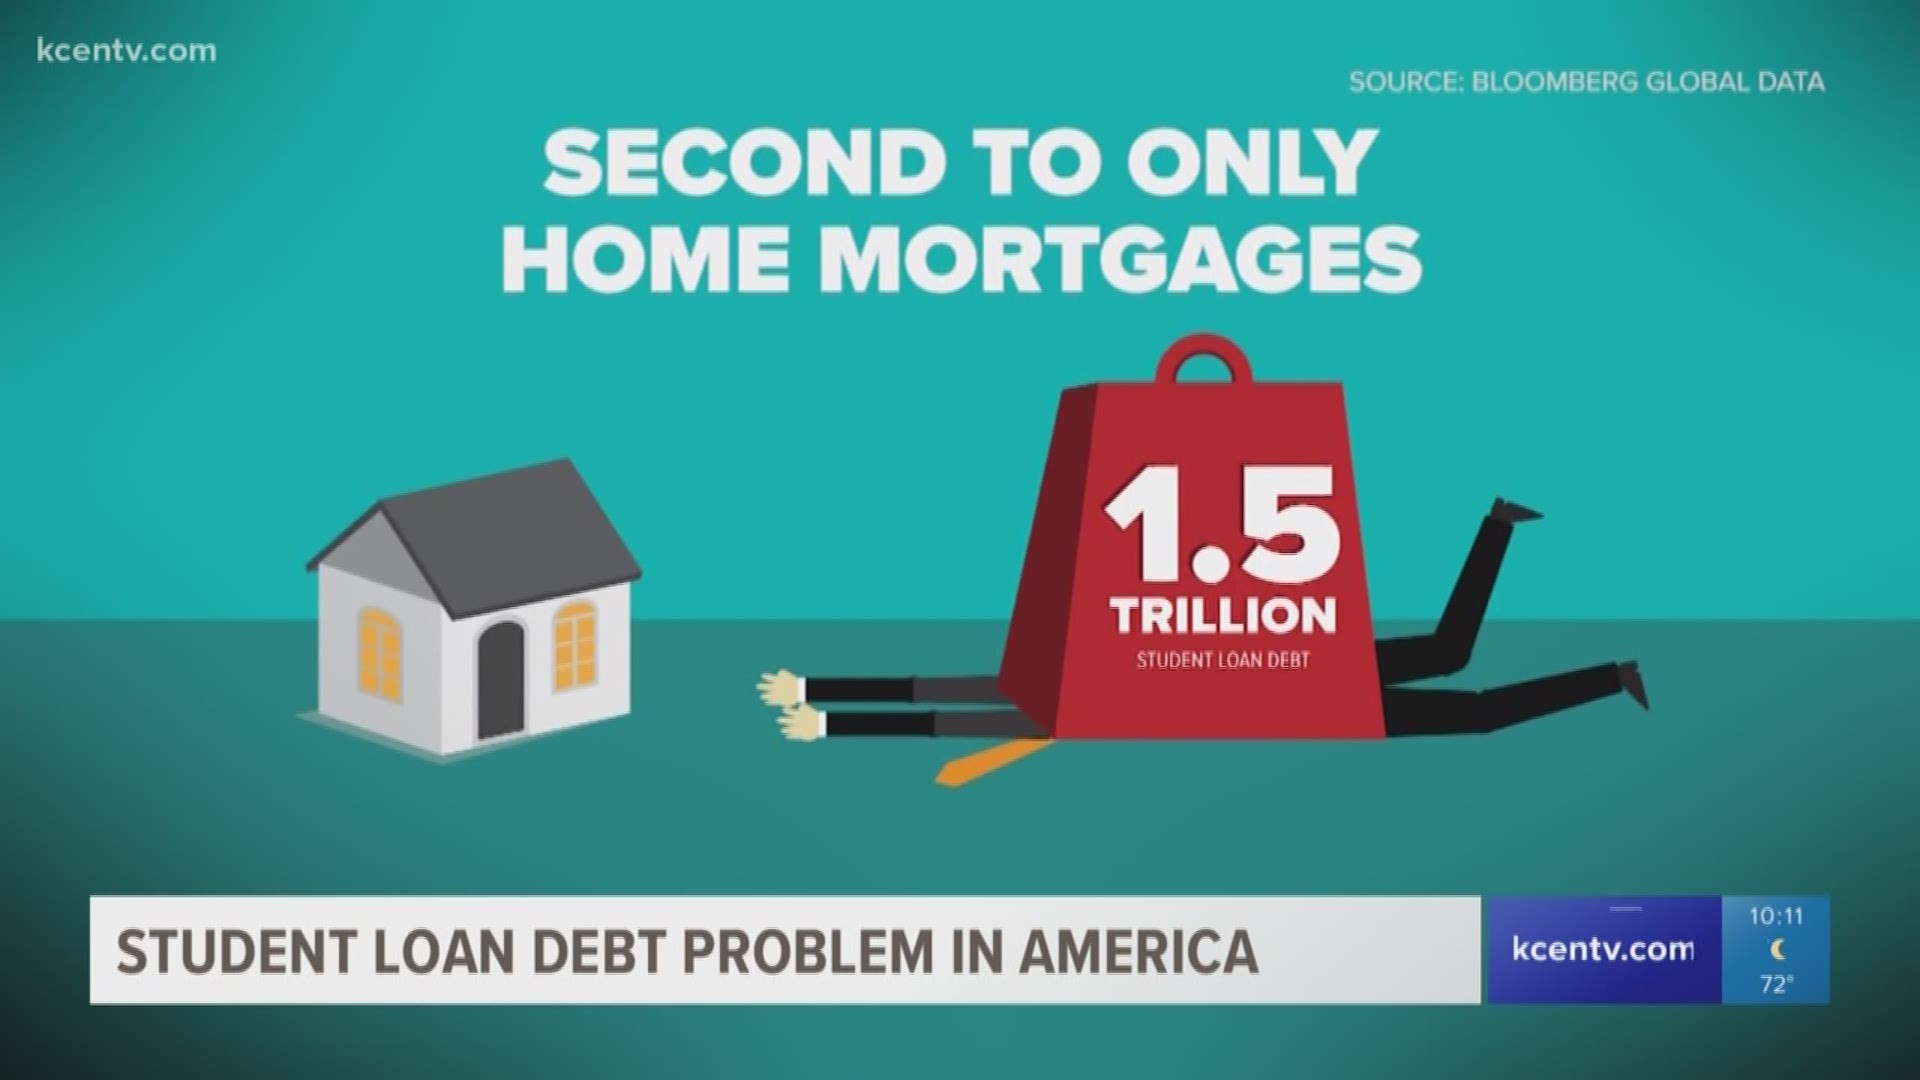 Student loan debt problem in America